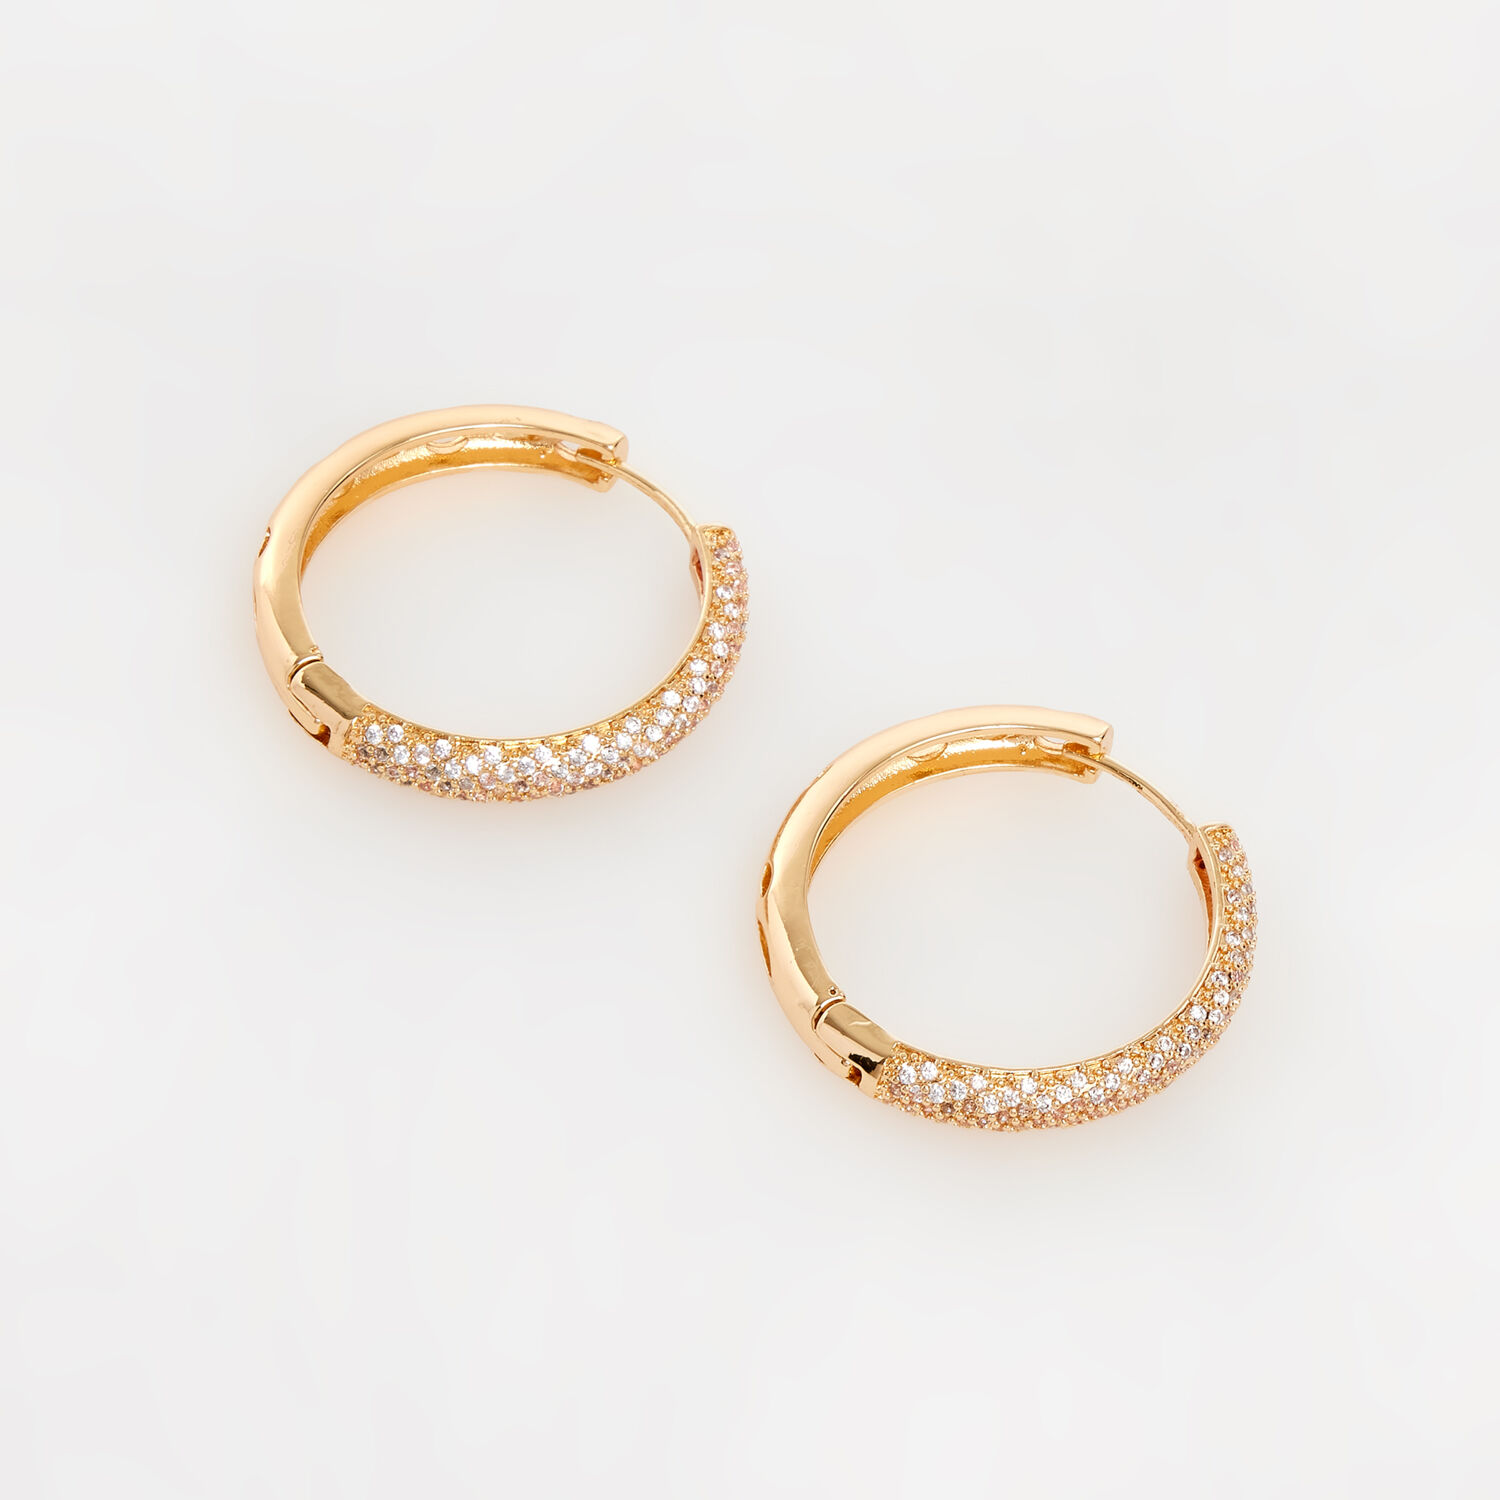 18ct Gold Plated Embellished Hoop Earrings - TK Maxx UK